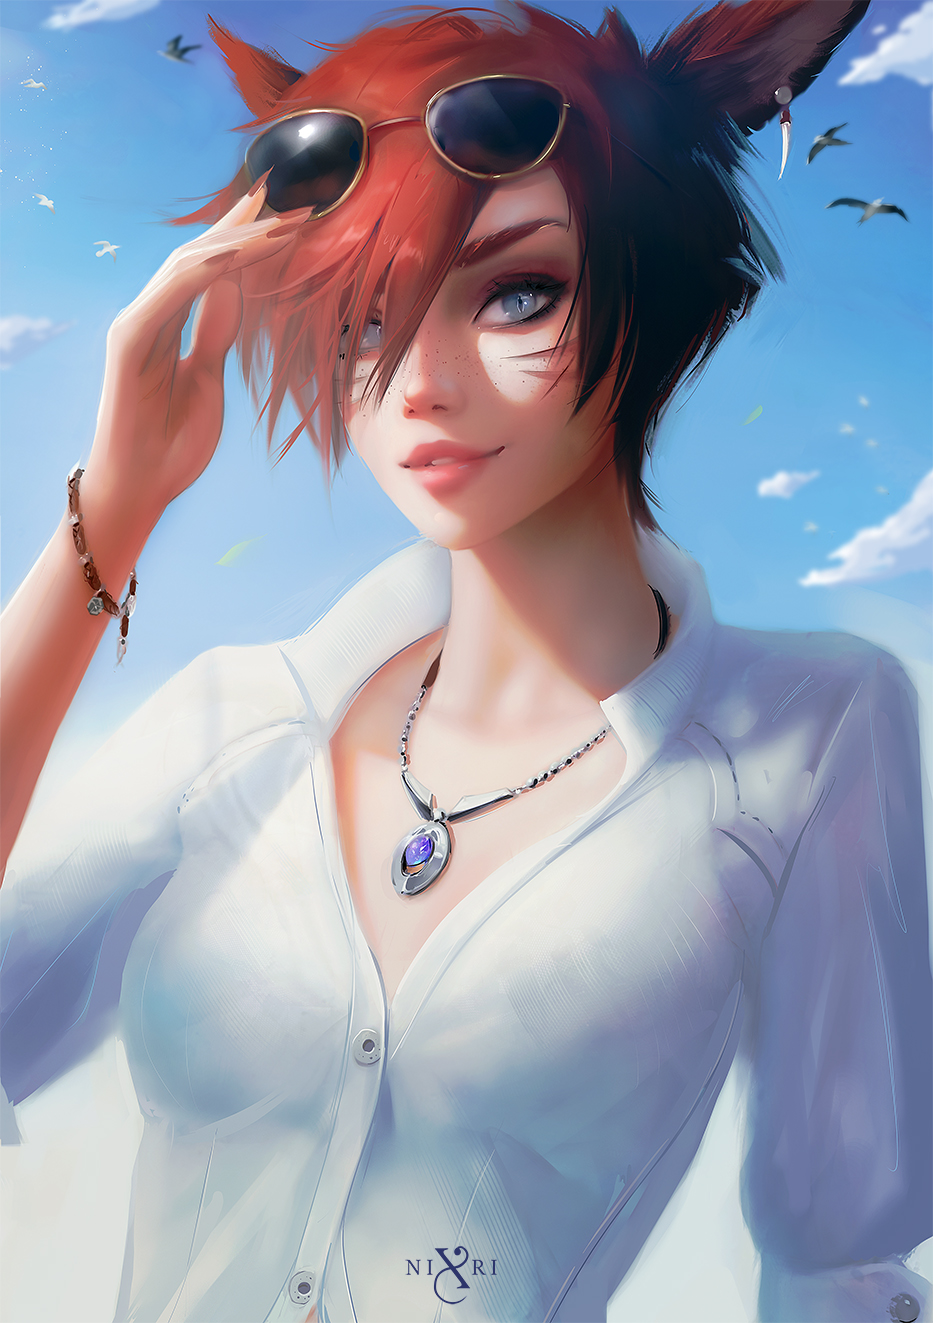 Nixri Drawing Women Final Fantasy Redhead Sunglasses Bangs Face Paint Shirt Necklace Sky 933x1323